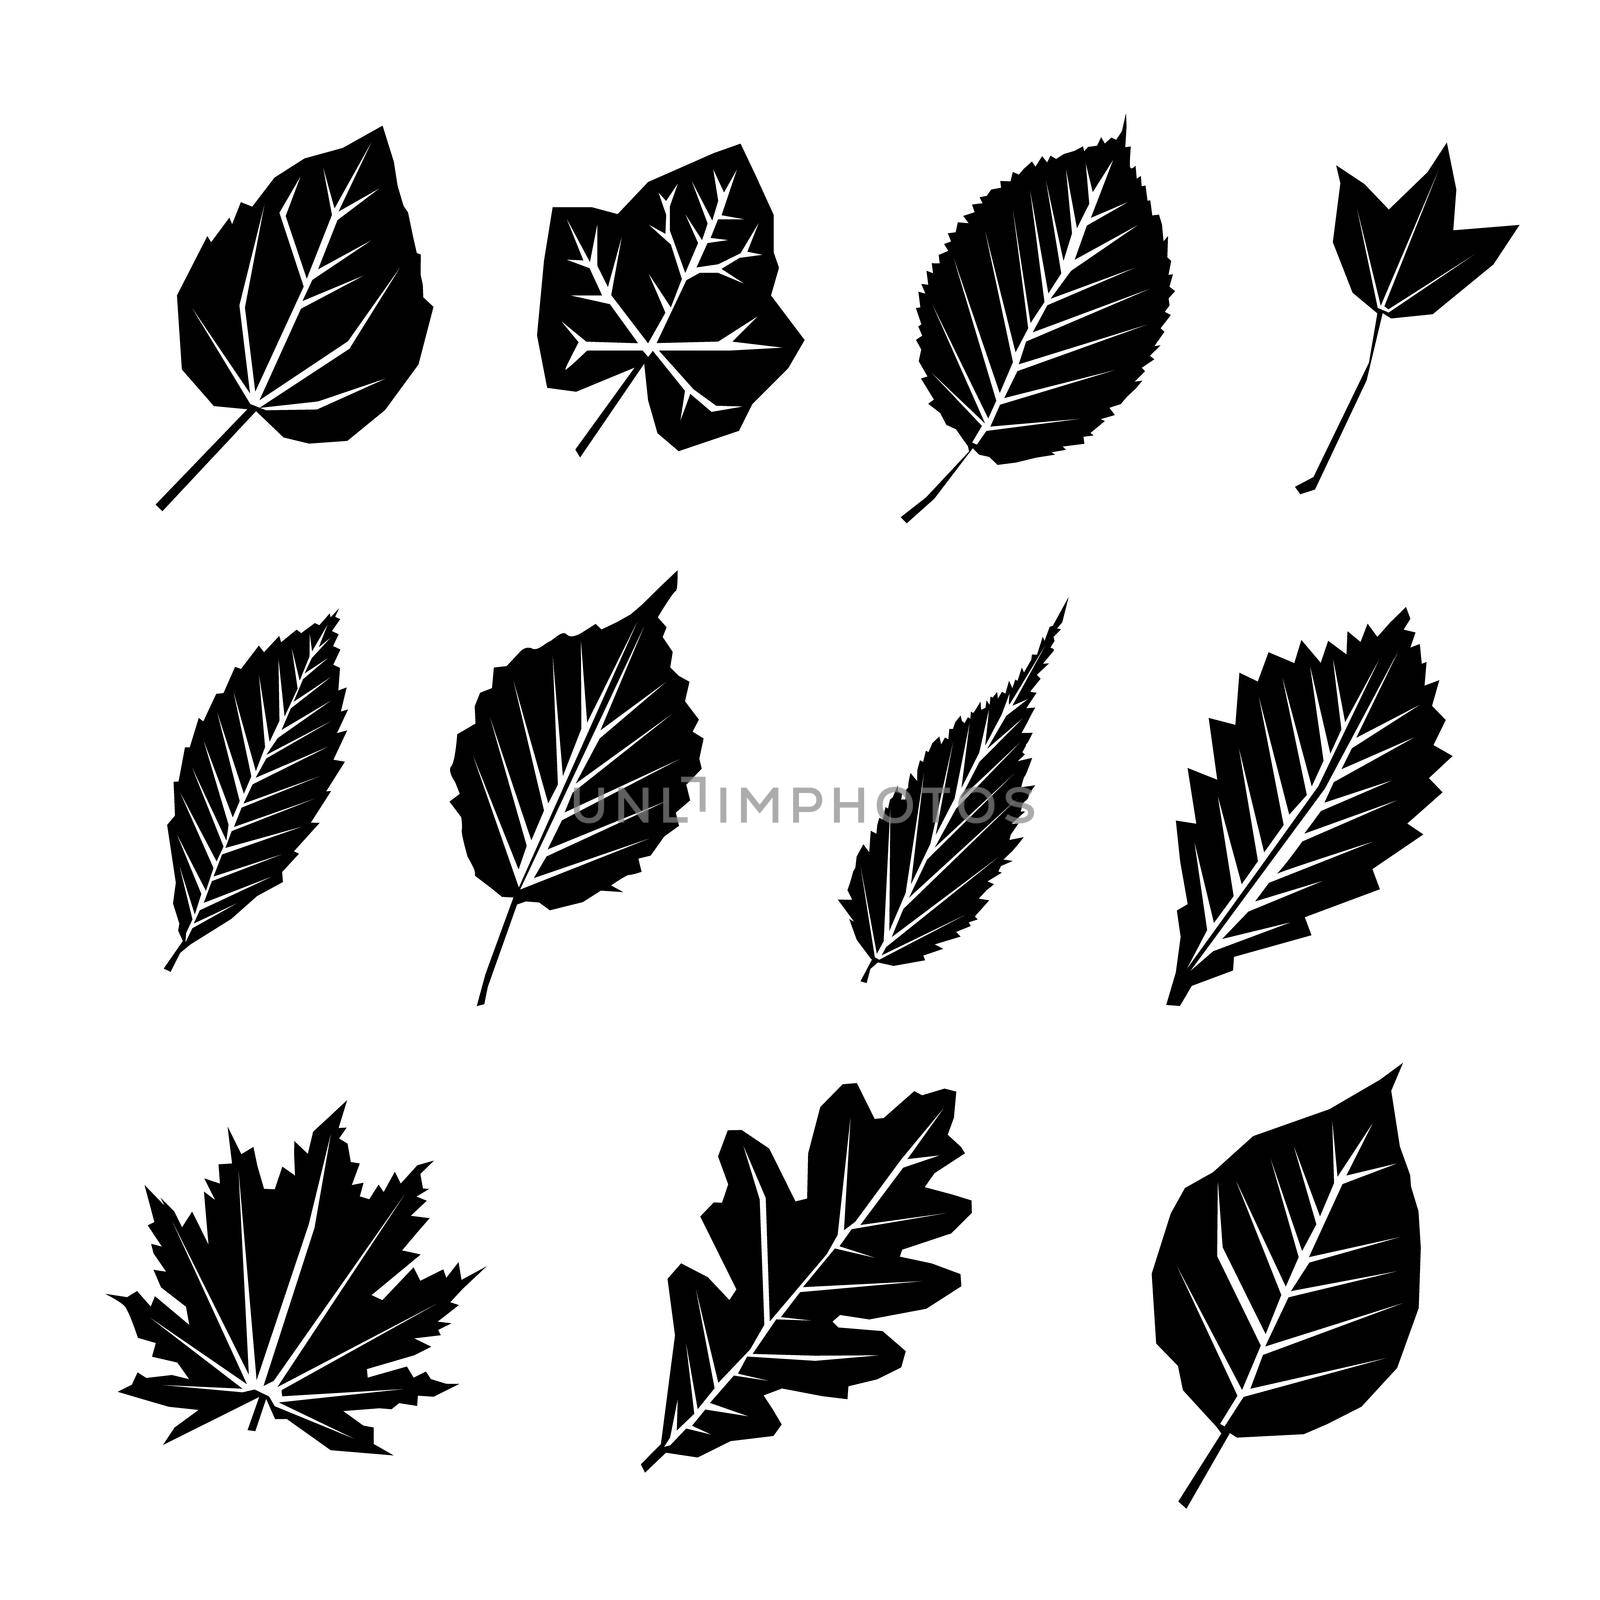 Leaf black silhouette icon set by Alxyzt